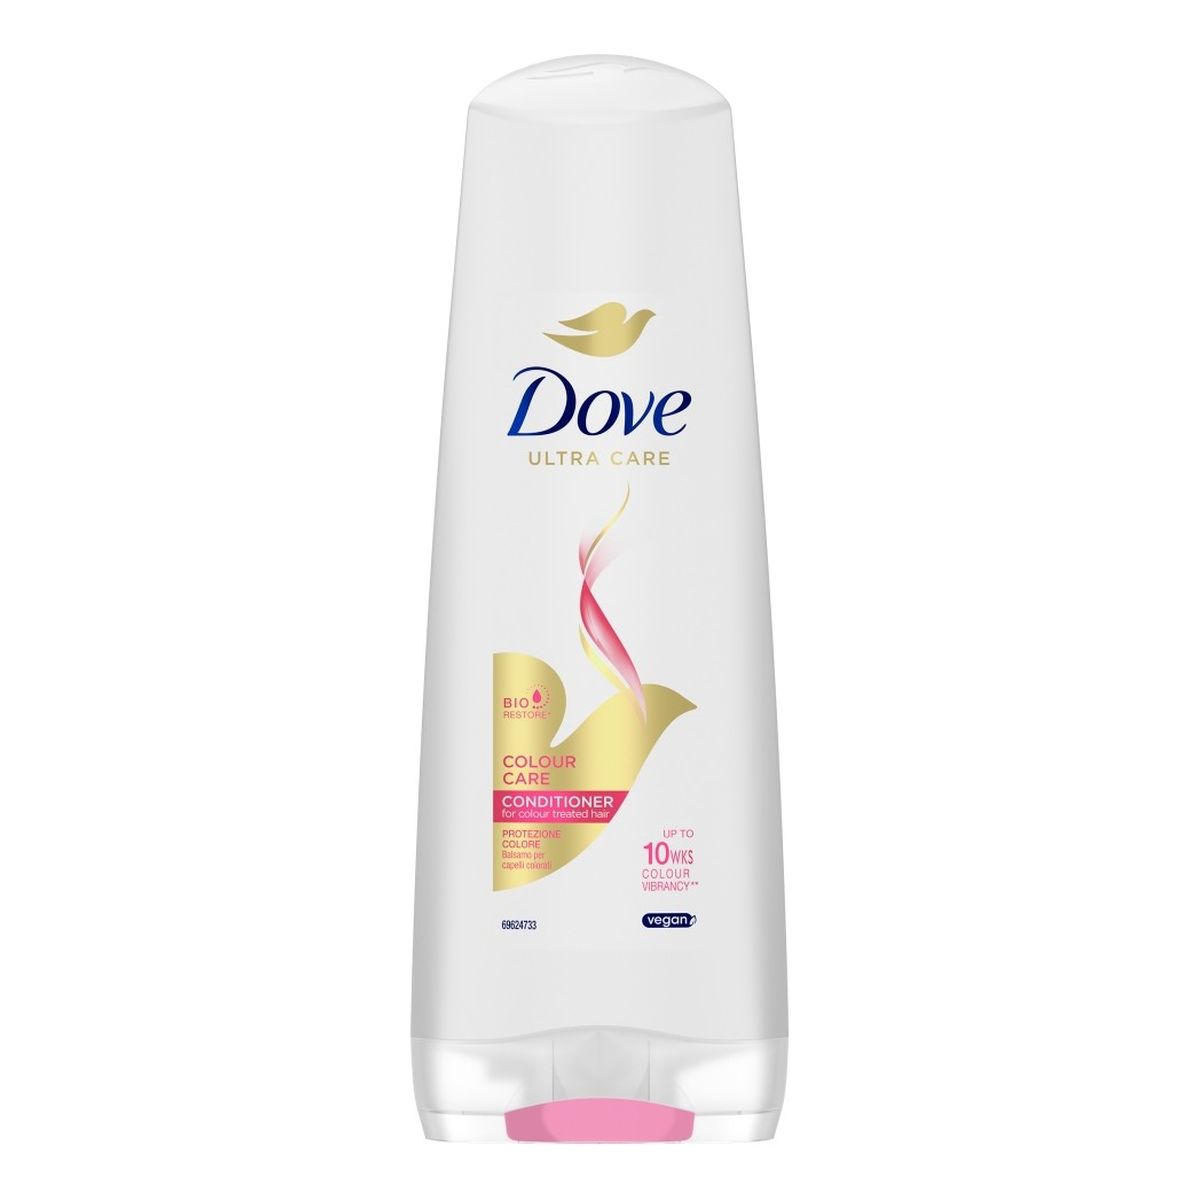 Unilever Dove ultra care odżywka do włosów farbowanych colour care 350ml